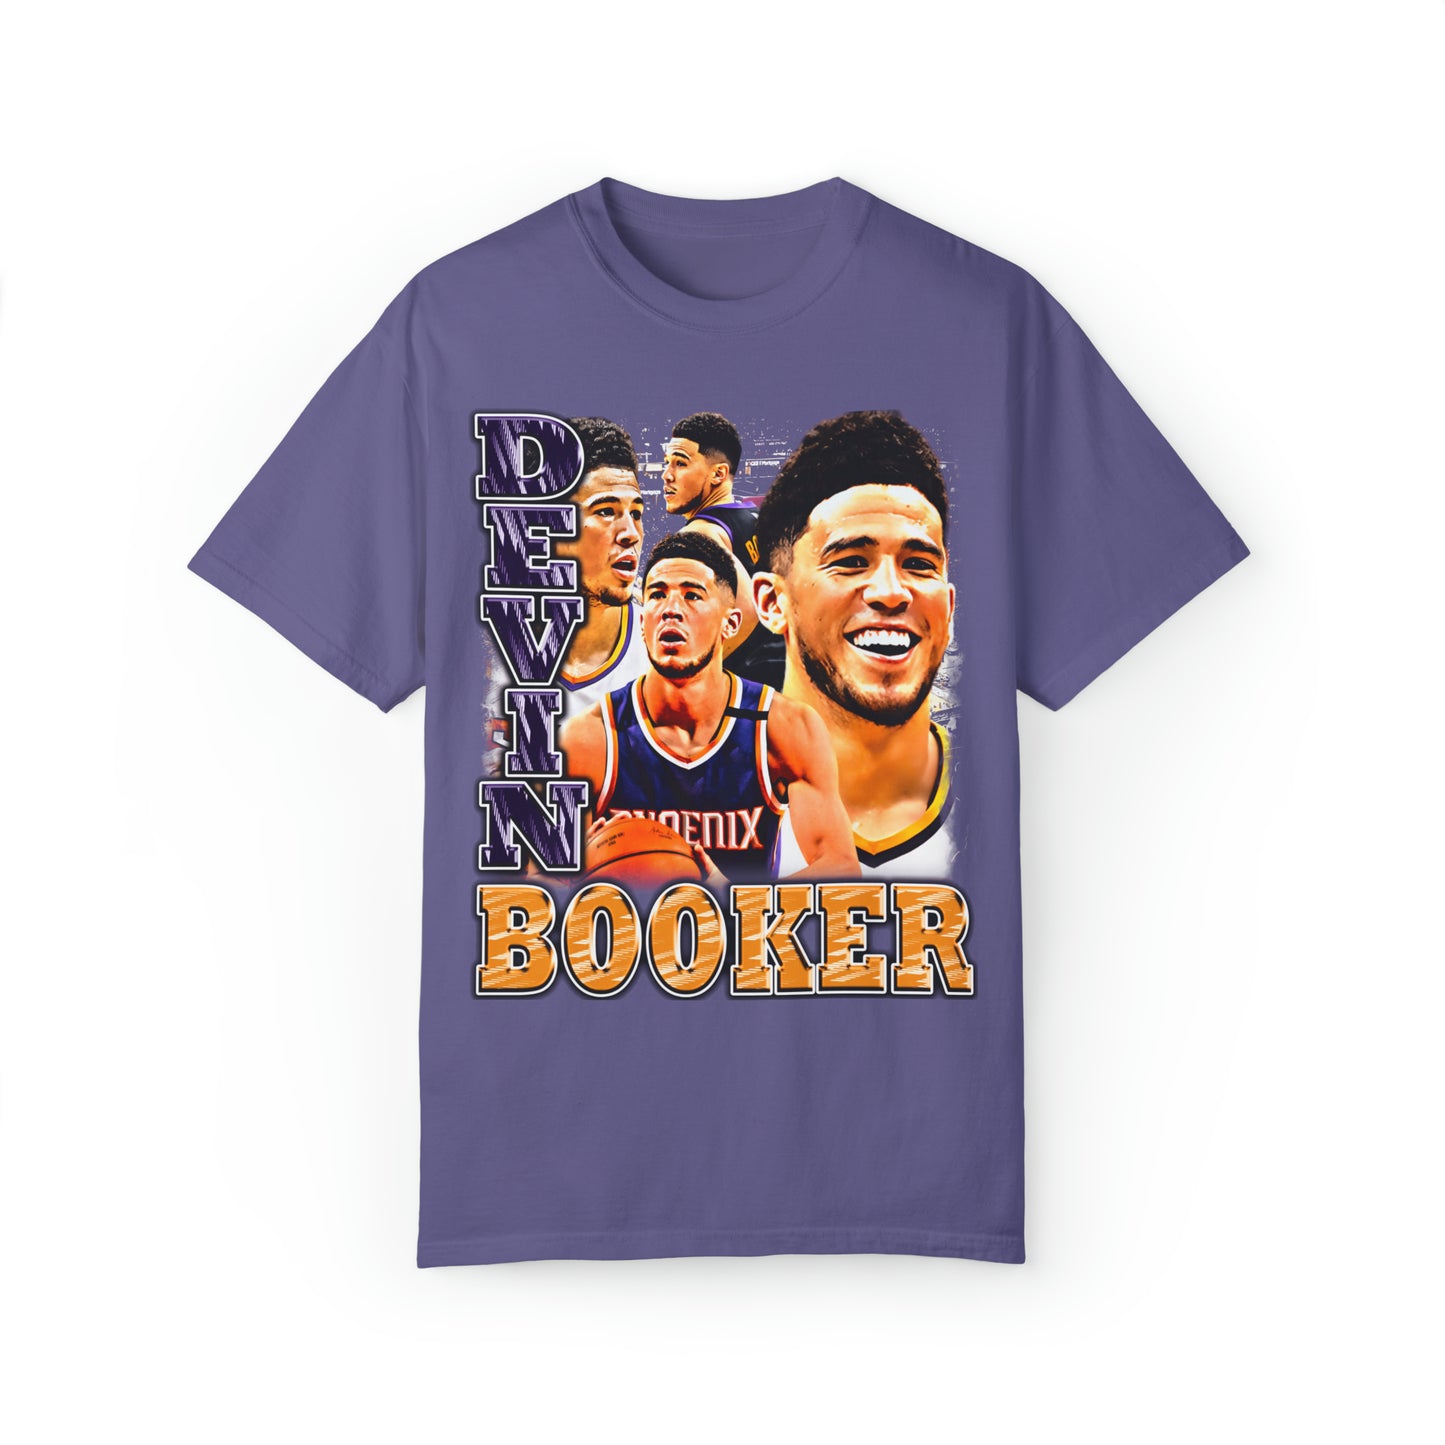 WIY x Booker Vintage T-Shirt